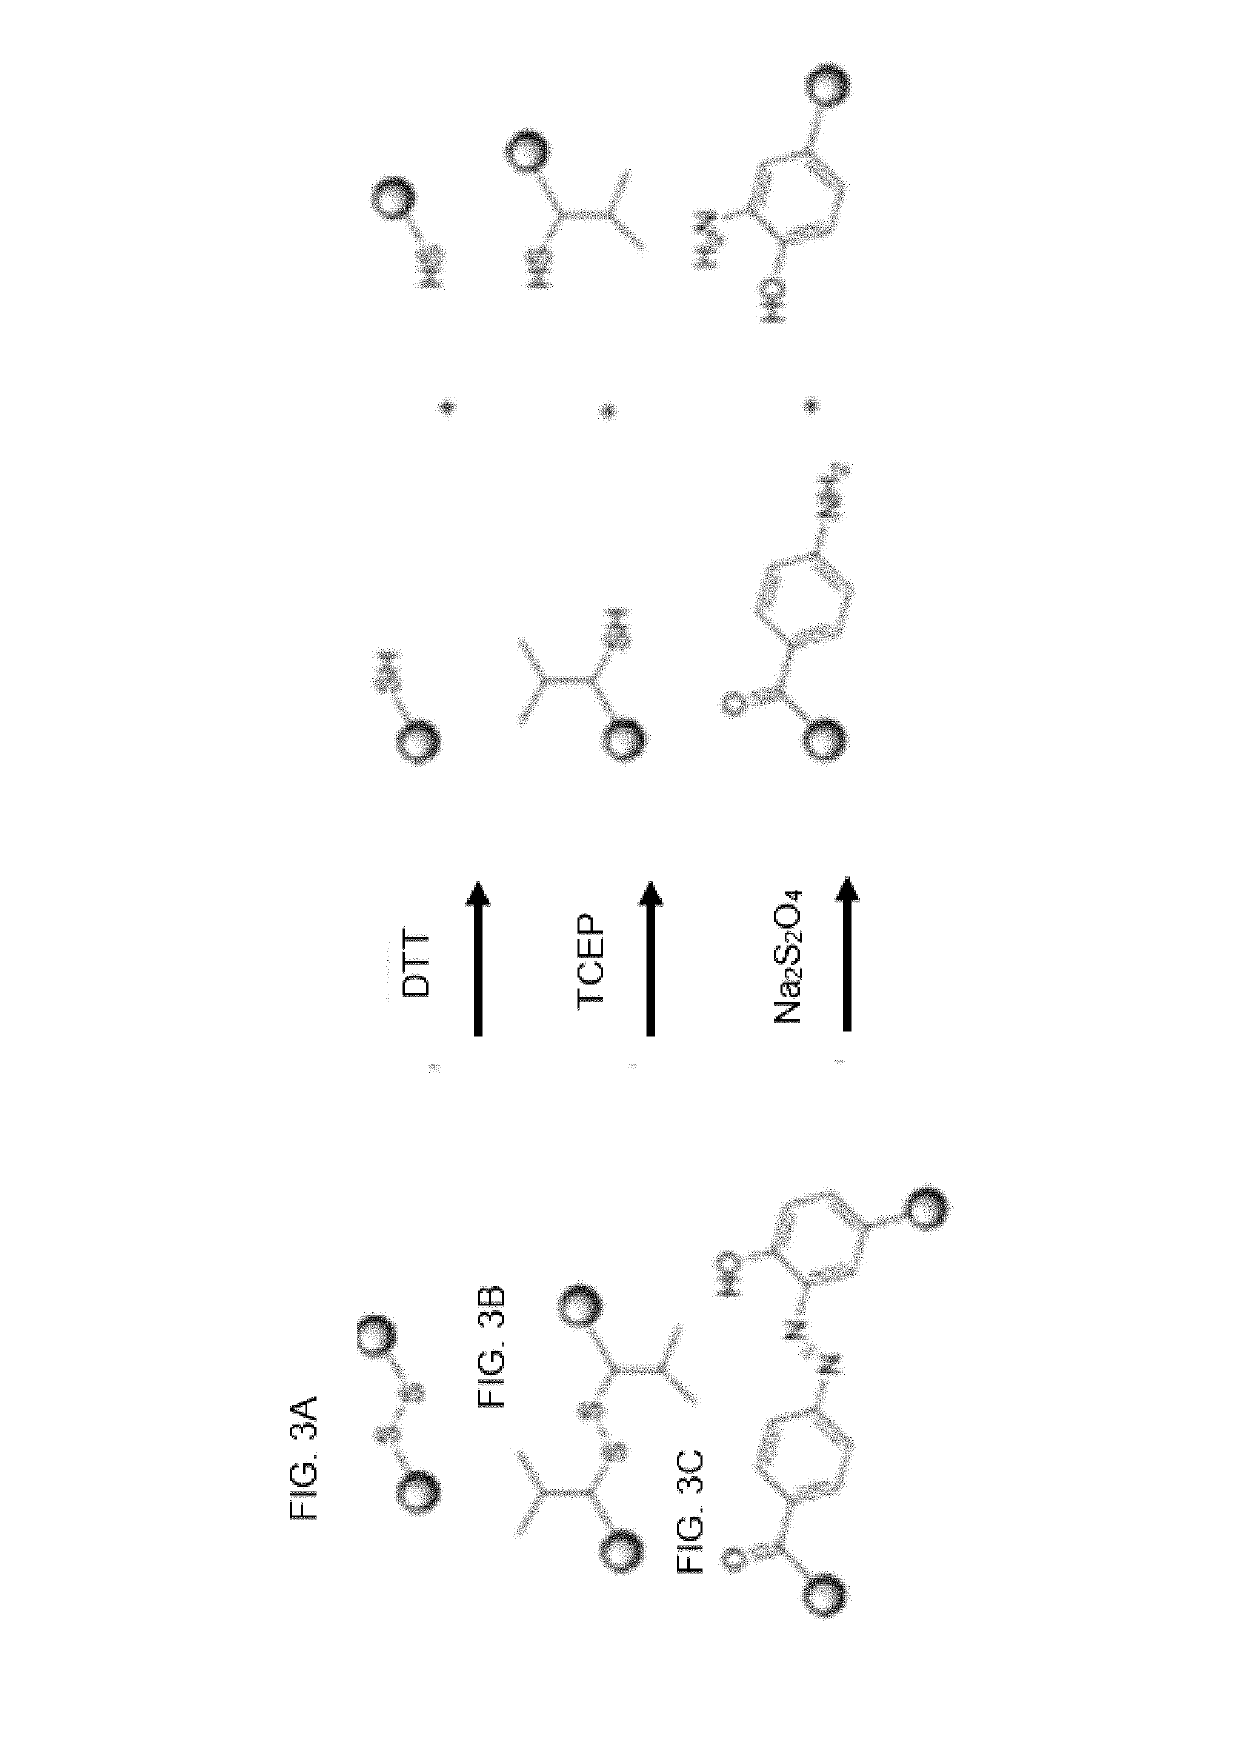 Oligonucleotide encoded chemical libraries